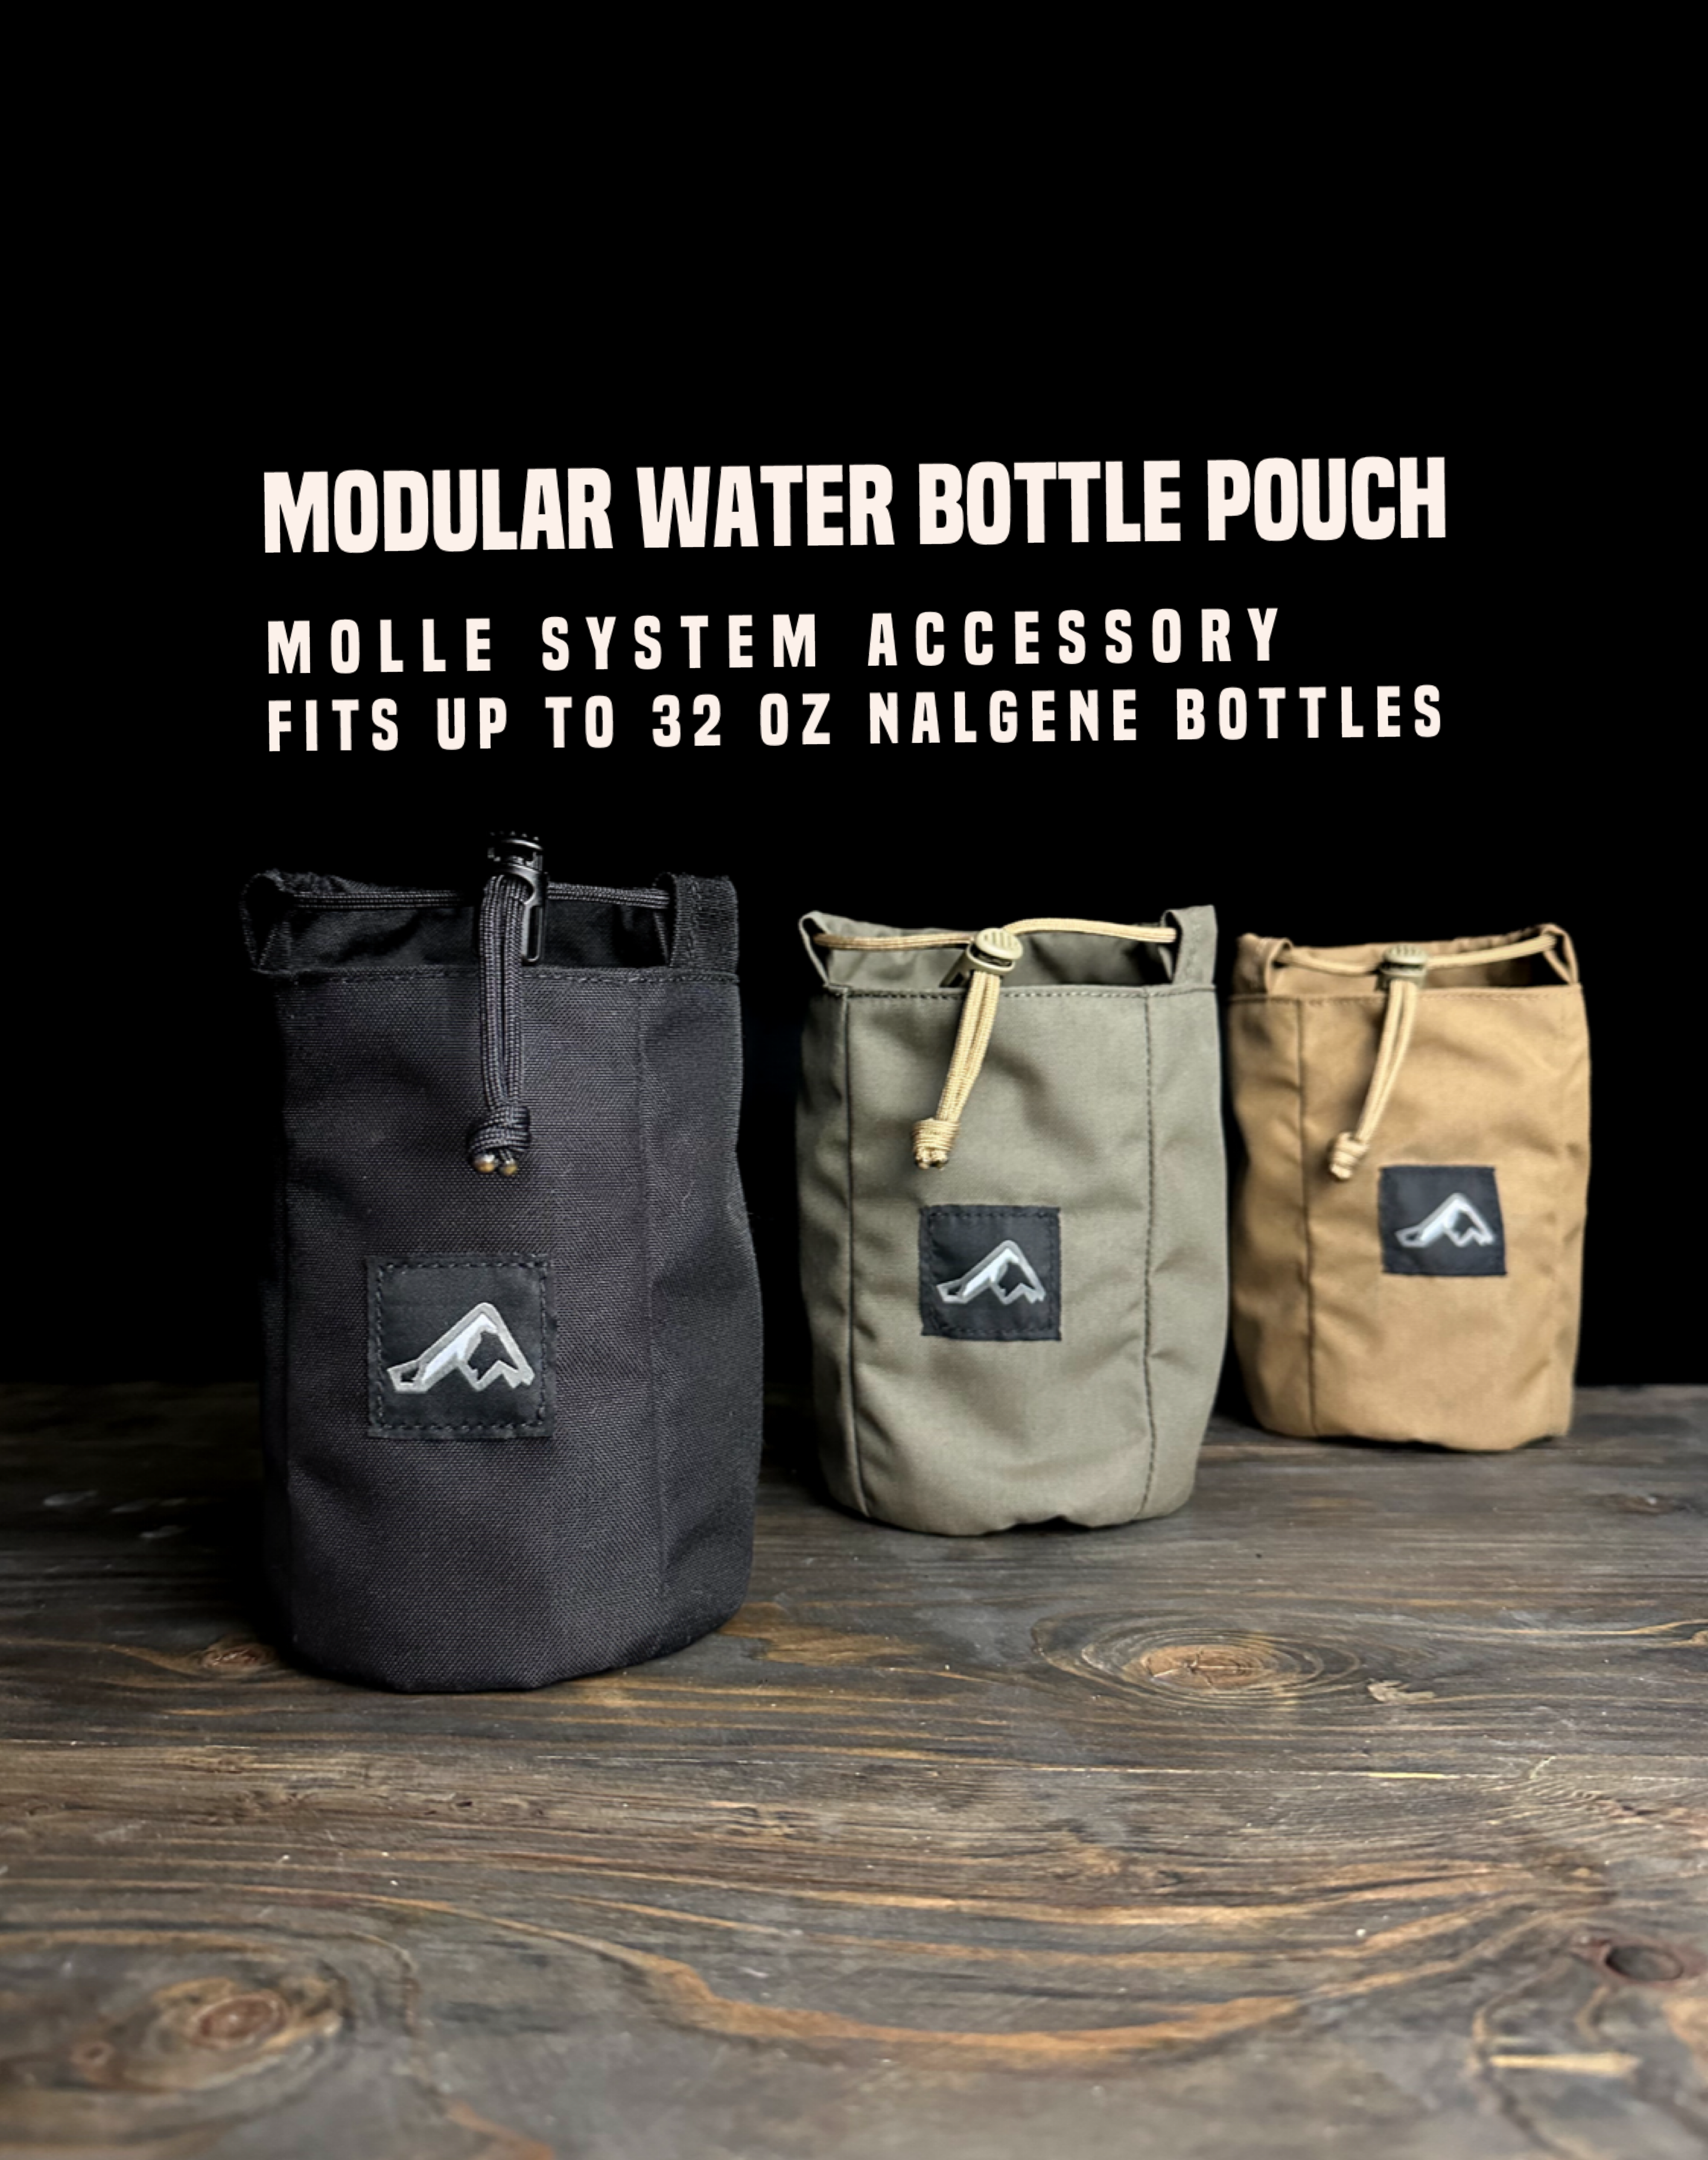 Ruckmule mountain gear modular MOLLE water bottle pouch for backpacking ultralight lightweight 